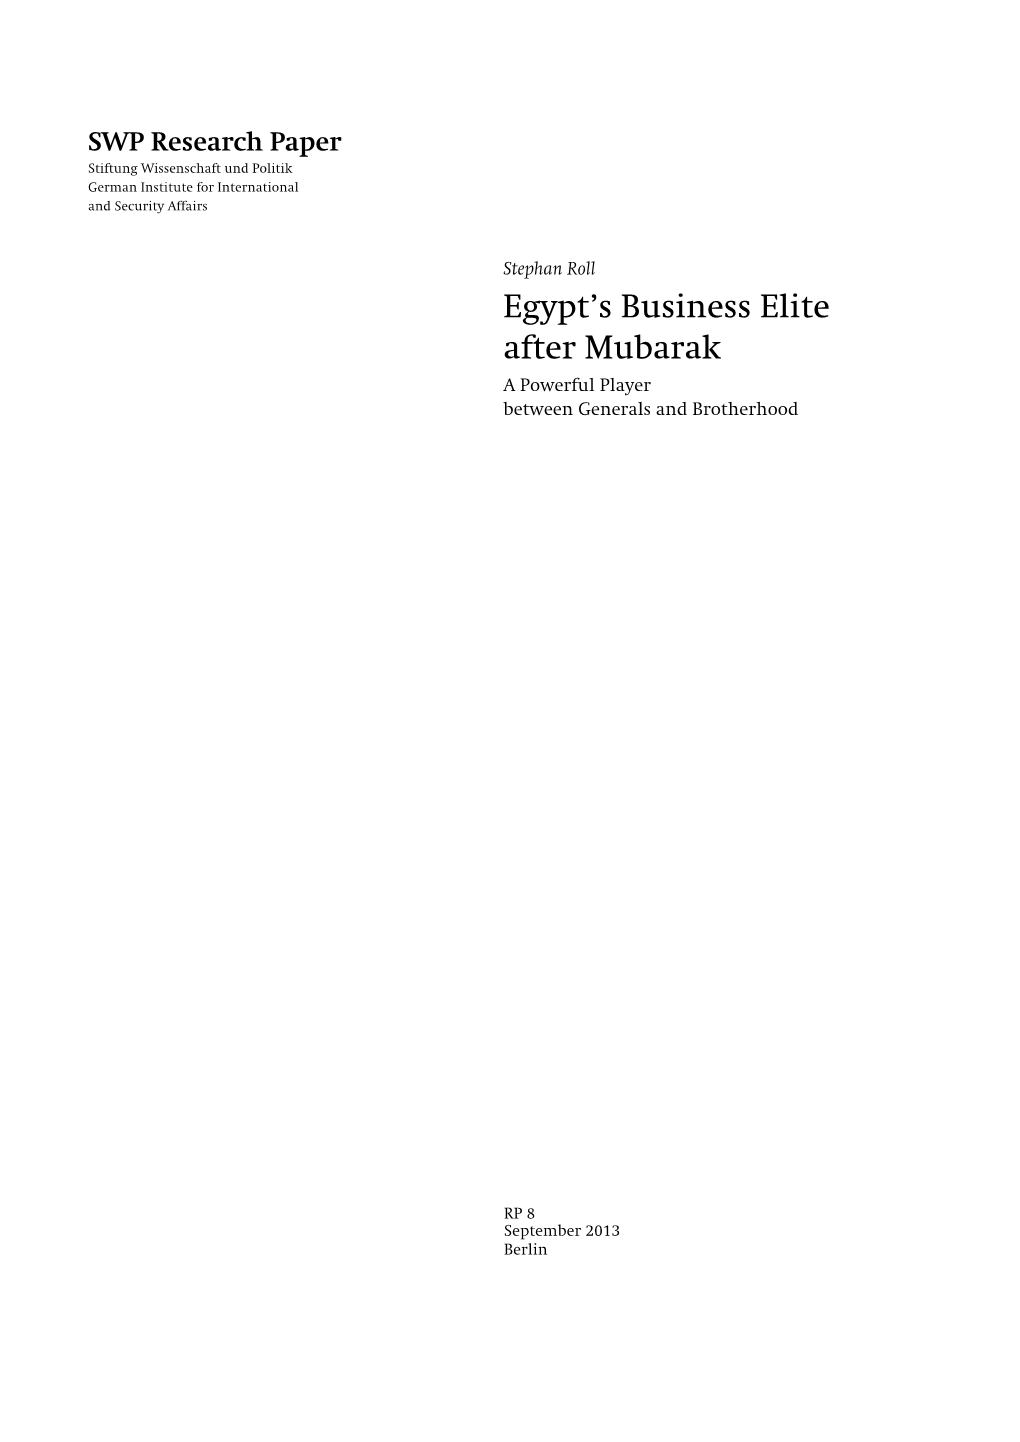 Egypt's Business Elite After Mubarak. a Powerful Player Between